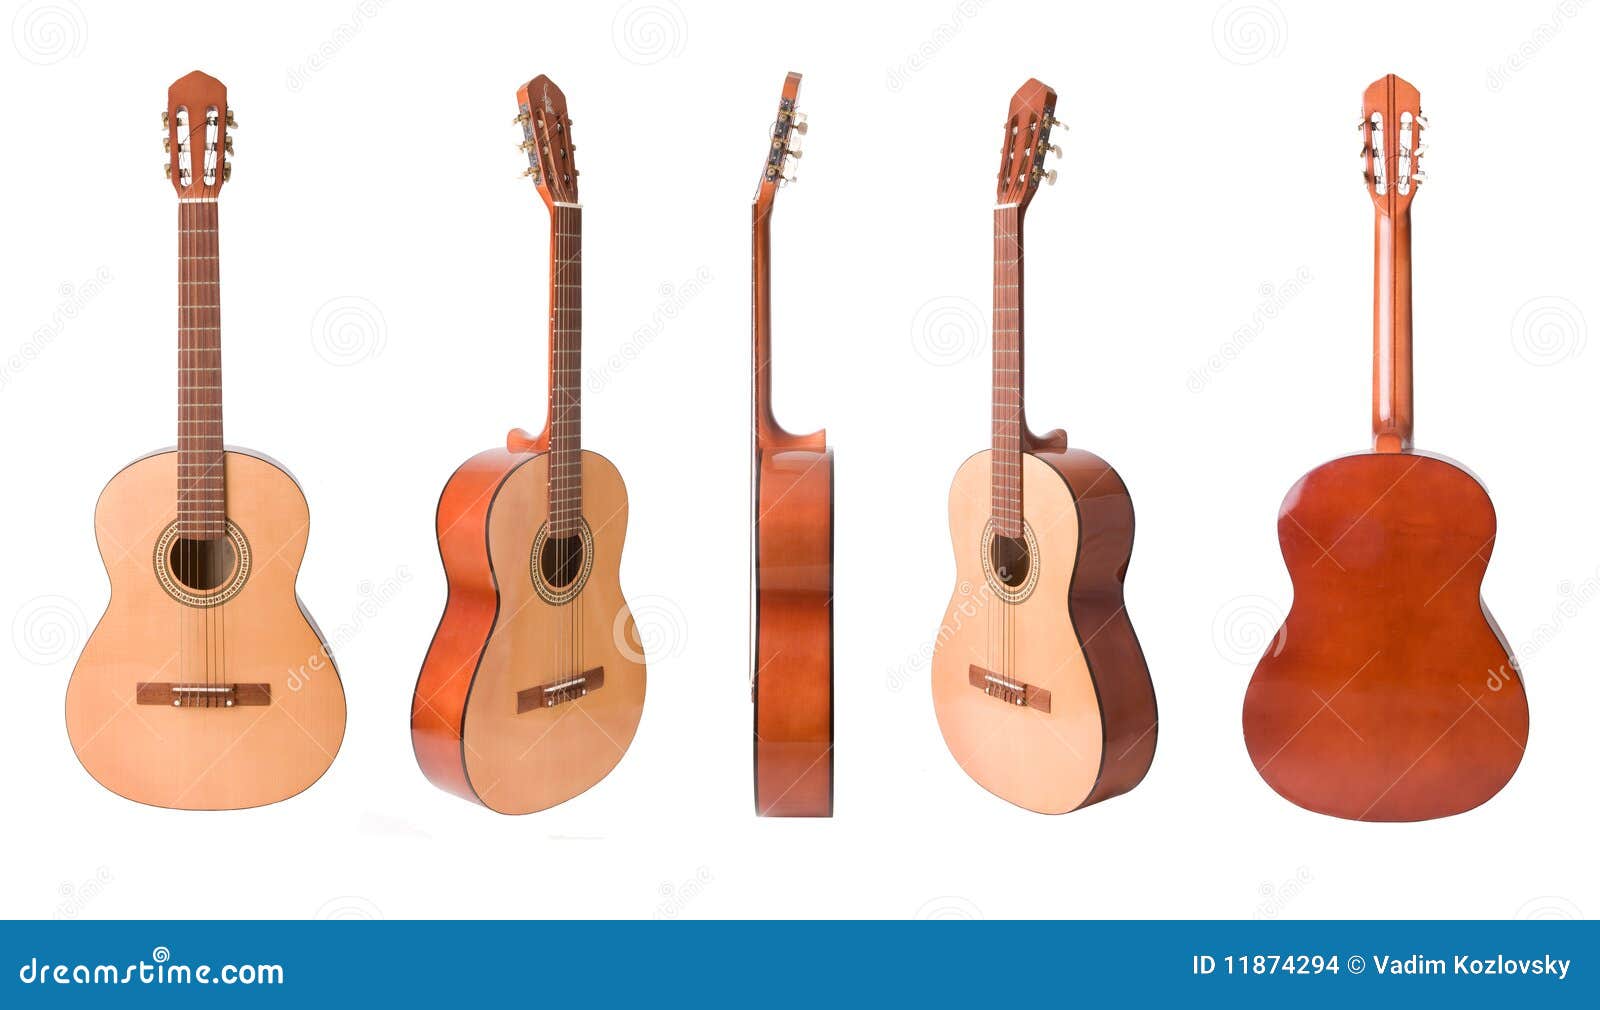 classical acoustic guitars set